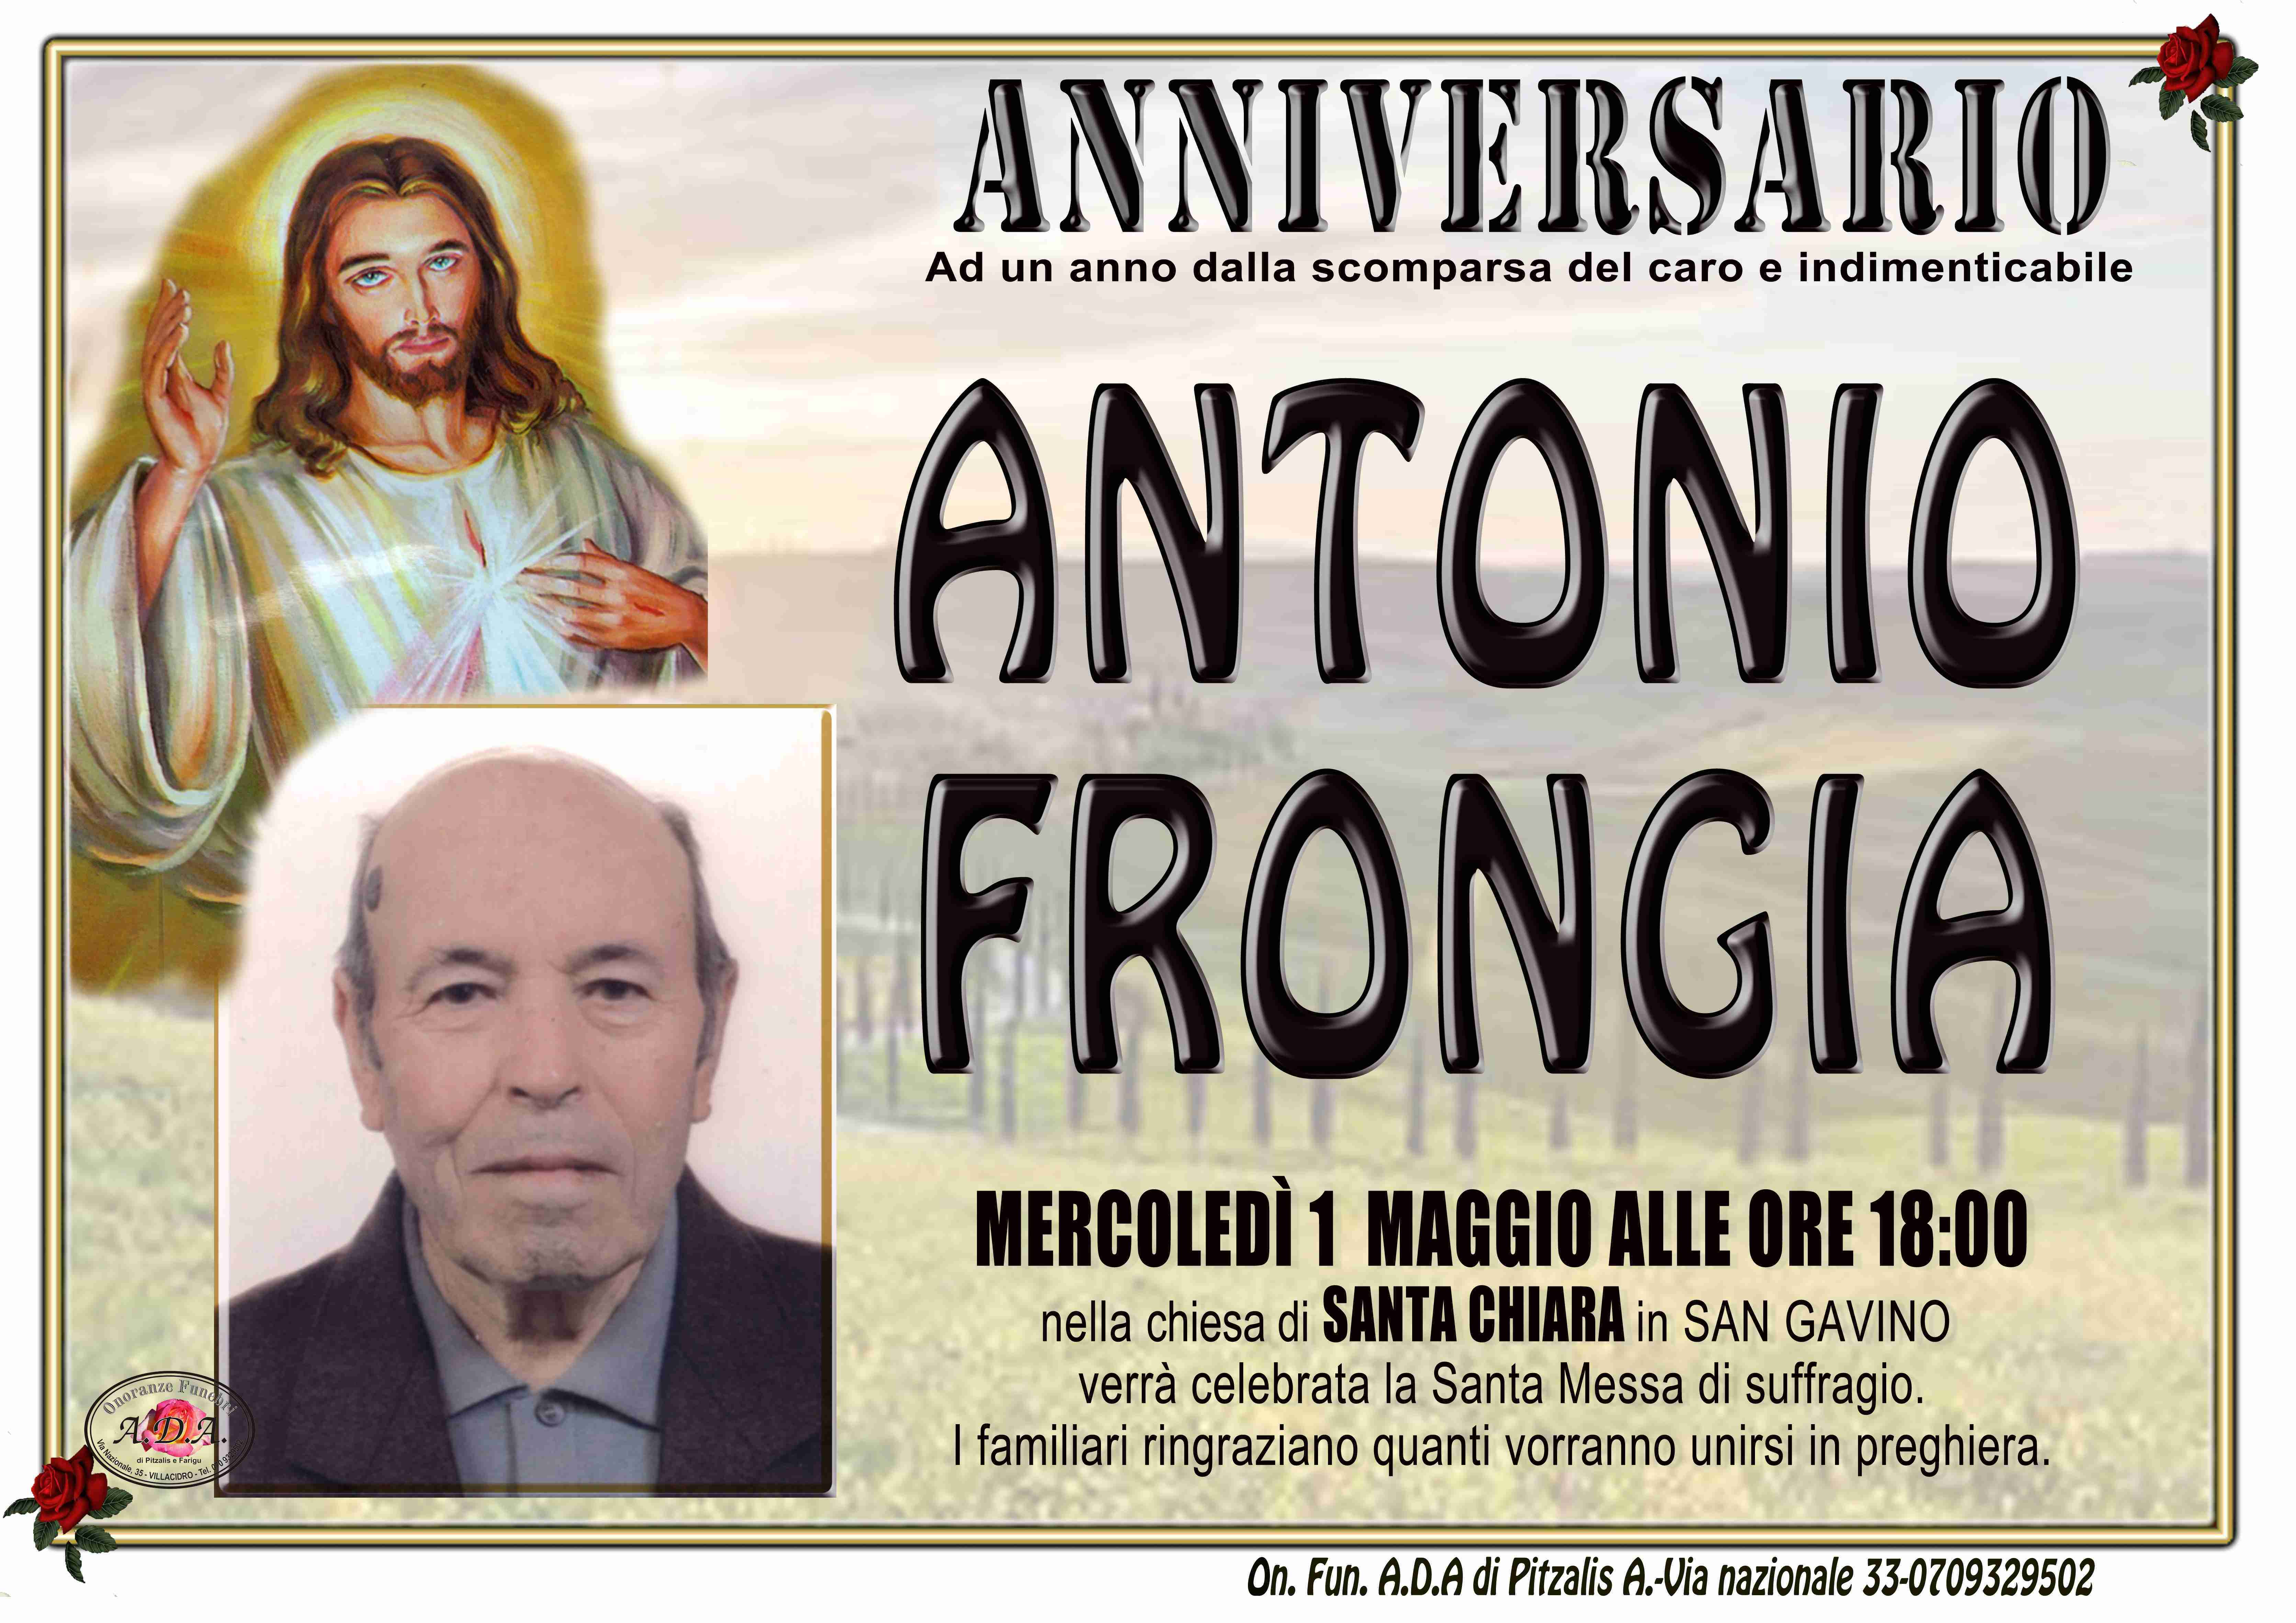 Antonio Frongia